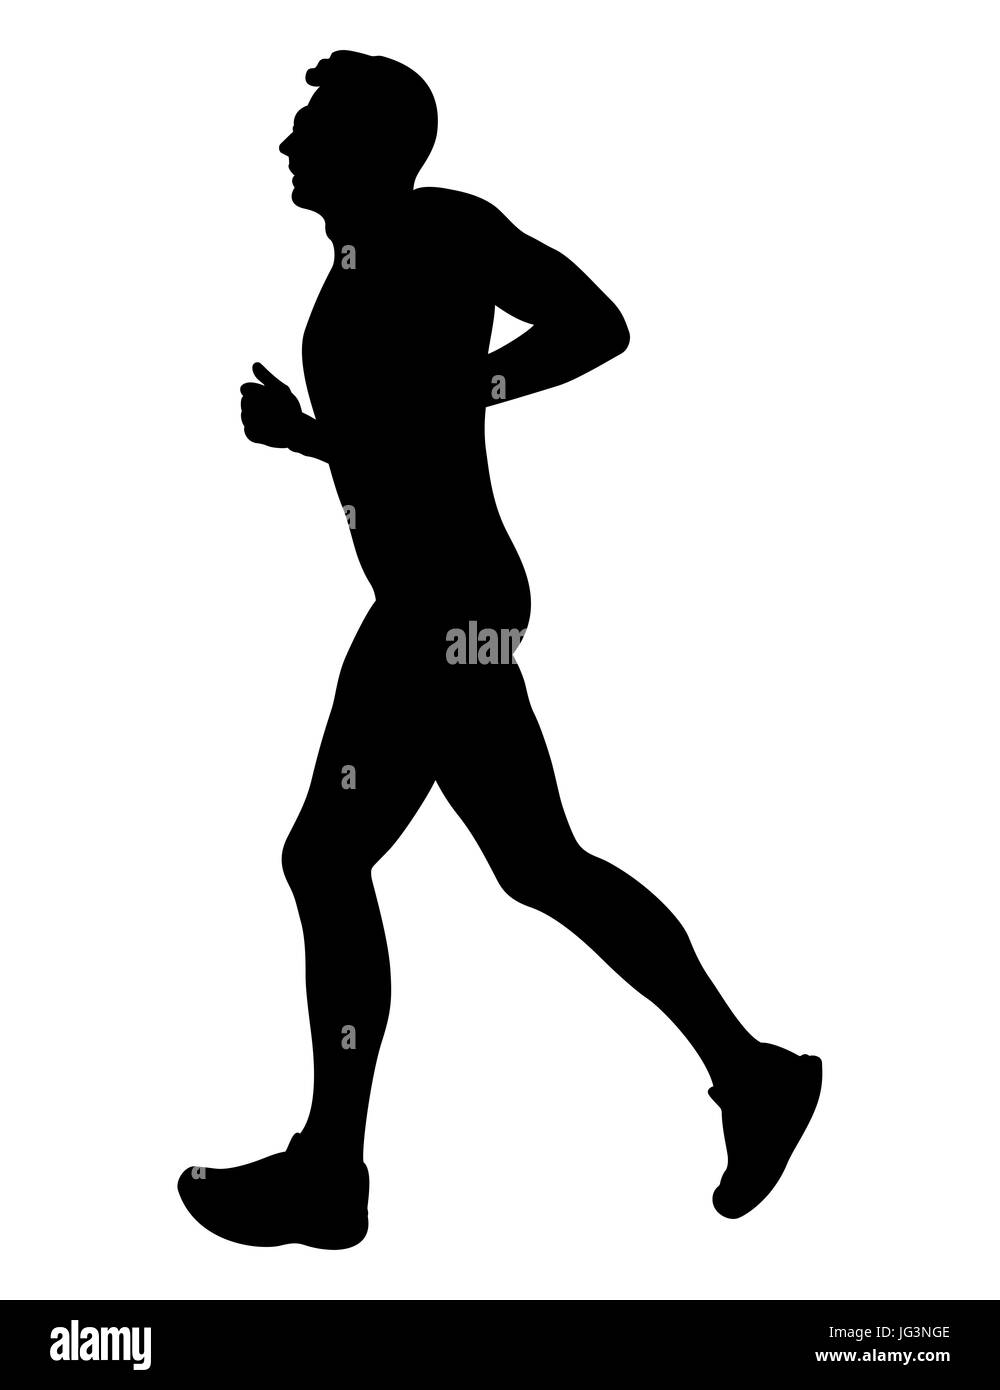 young male runner marathon running black silhouette Stock Photo